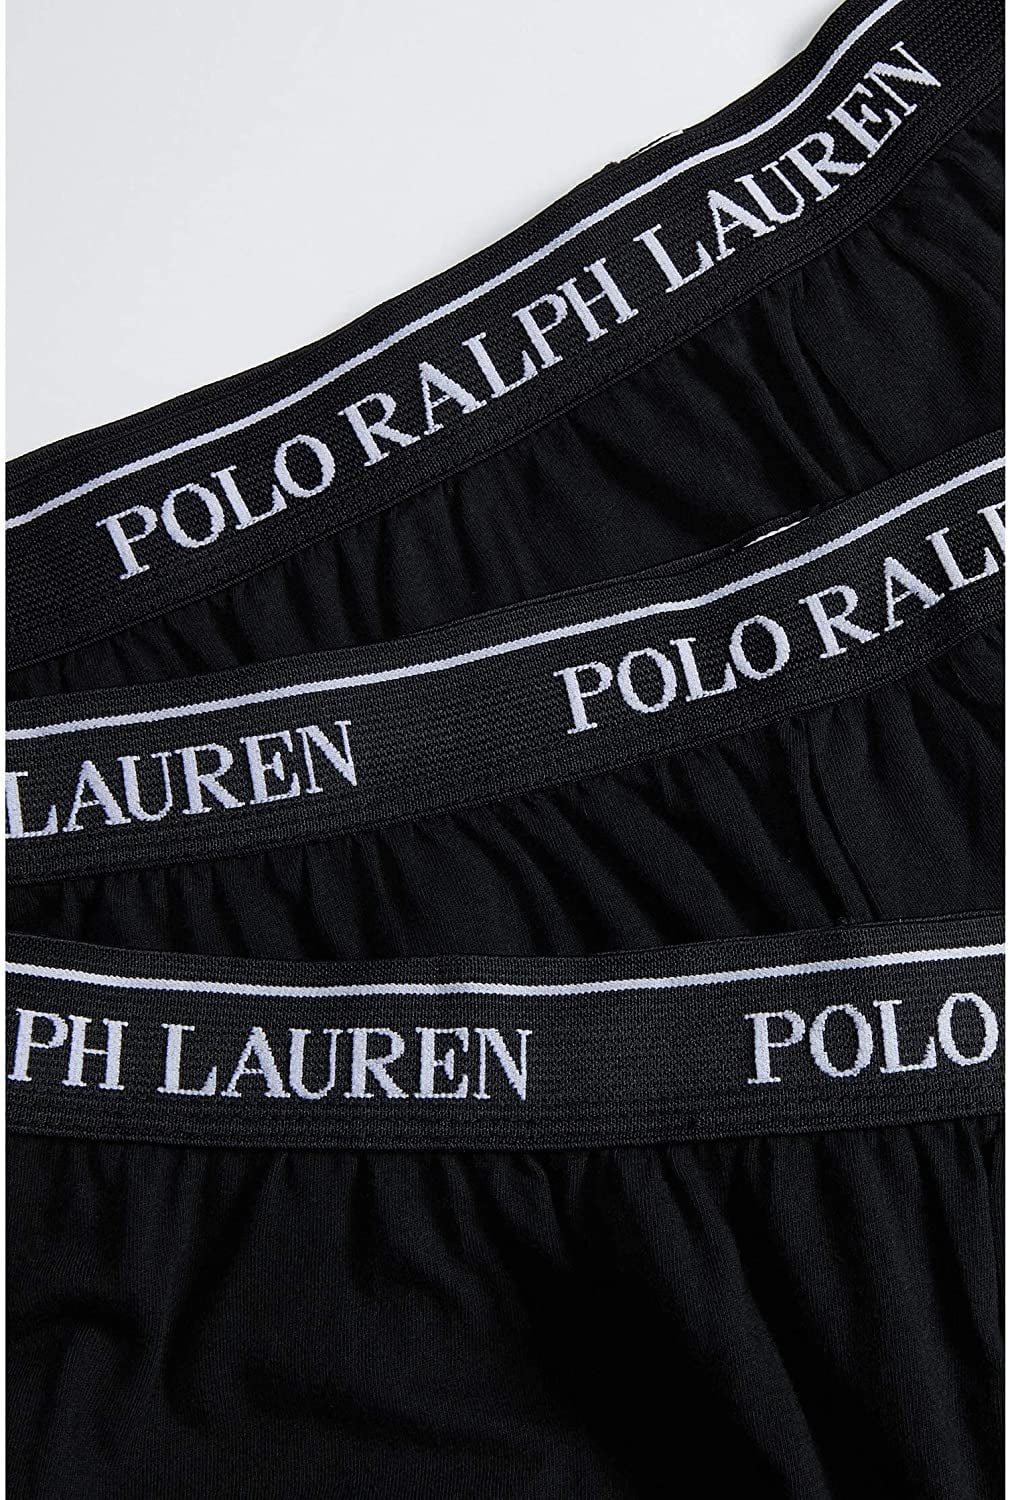 Polo Ralph Lauren Classic Fit Cotton Boxers 3-pack